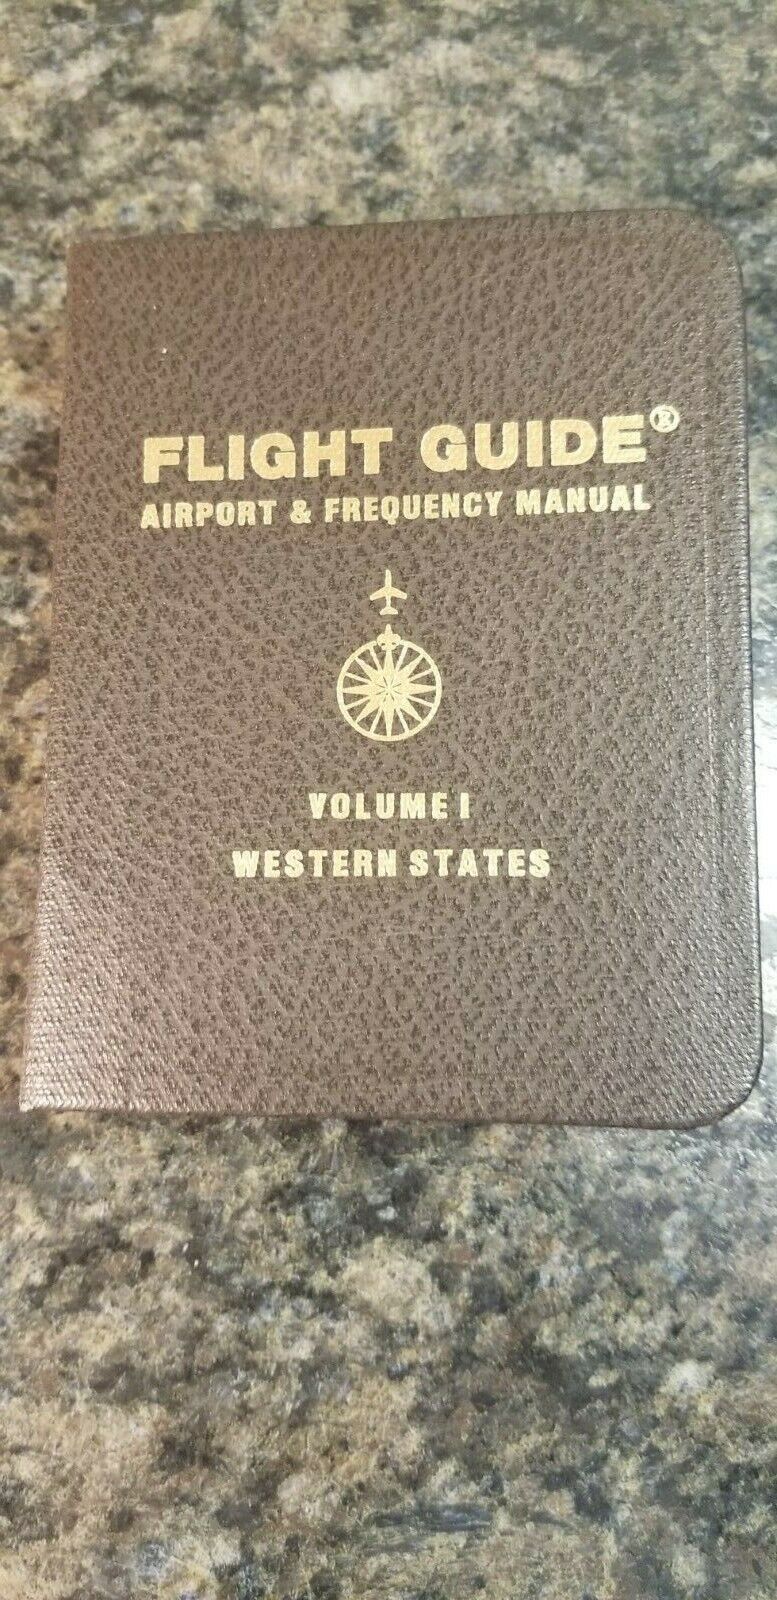 Vintage 1964 Flight Guide Vol. I Western States by Monty Navarre (304)